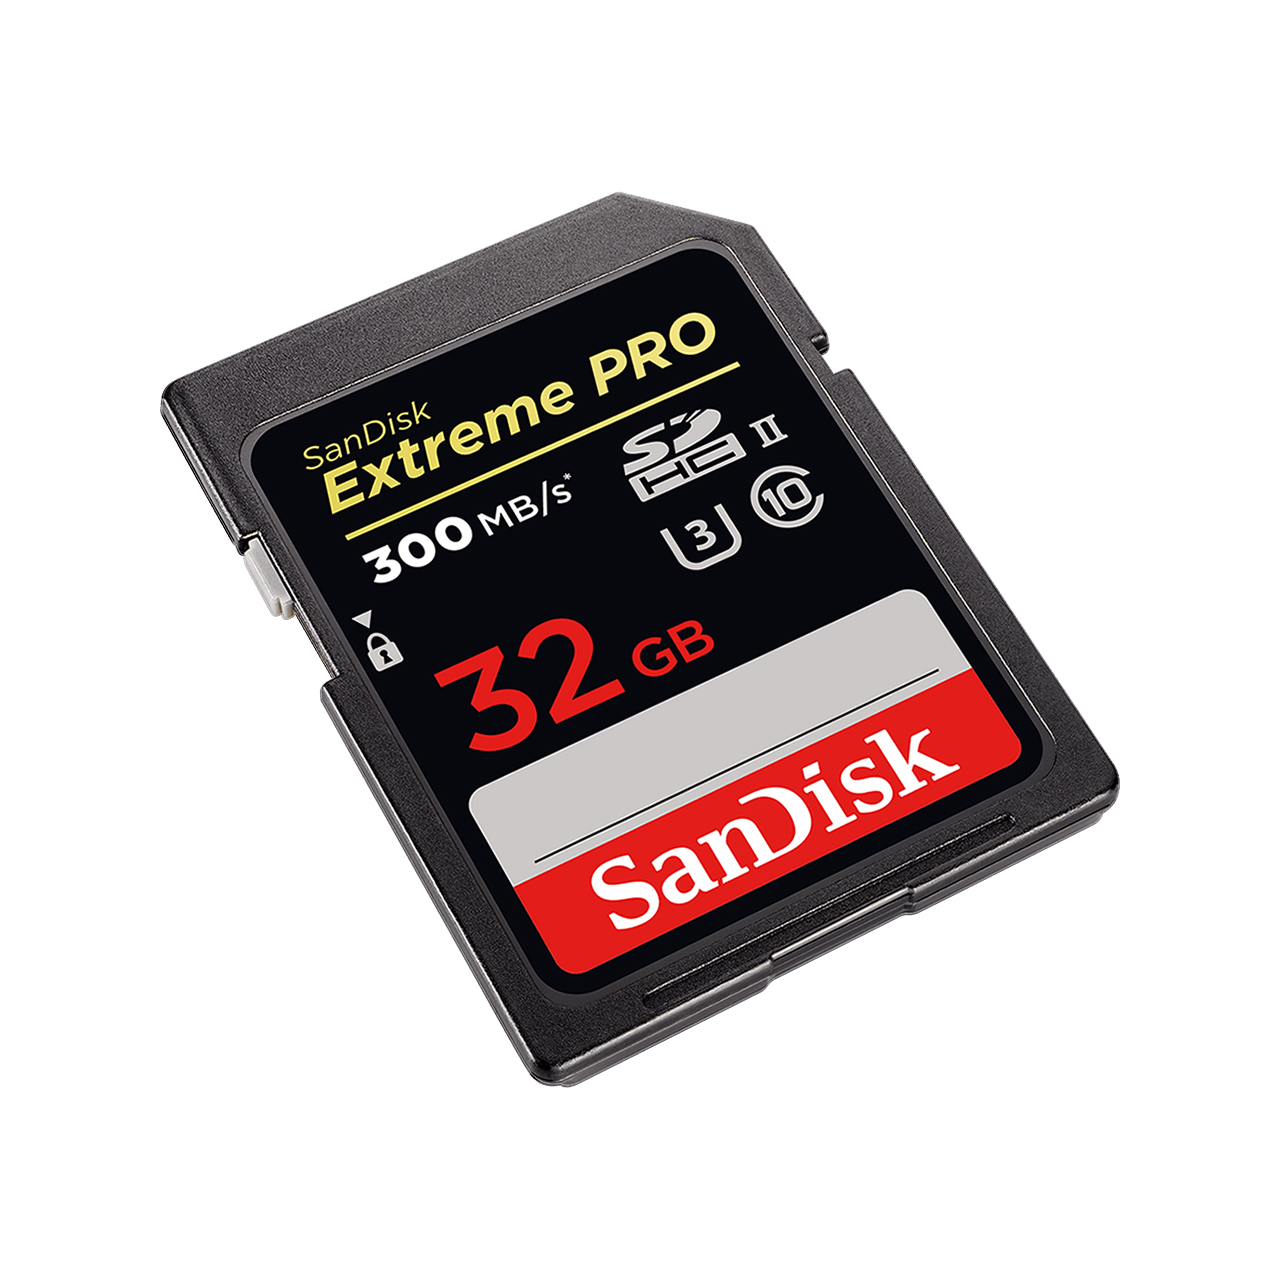 Sandisk SDHC Extreme Pro 32GB 300MB/s UHS-II U3 geheugenkaart - Ringfoto  Meppel